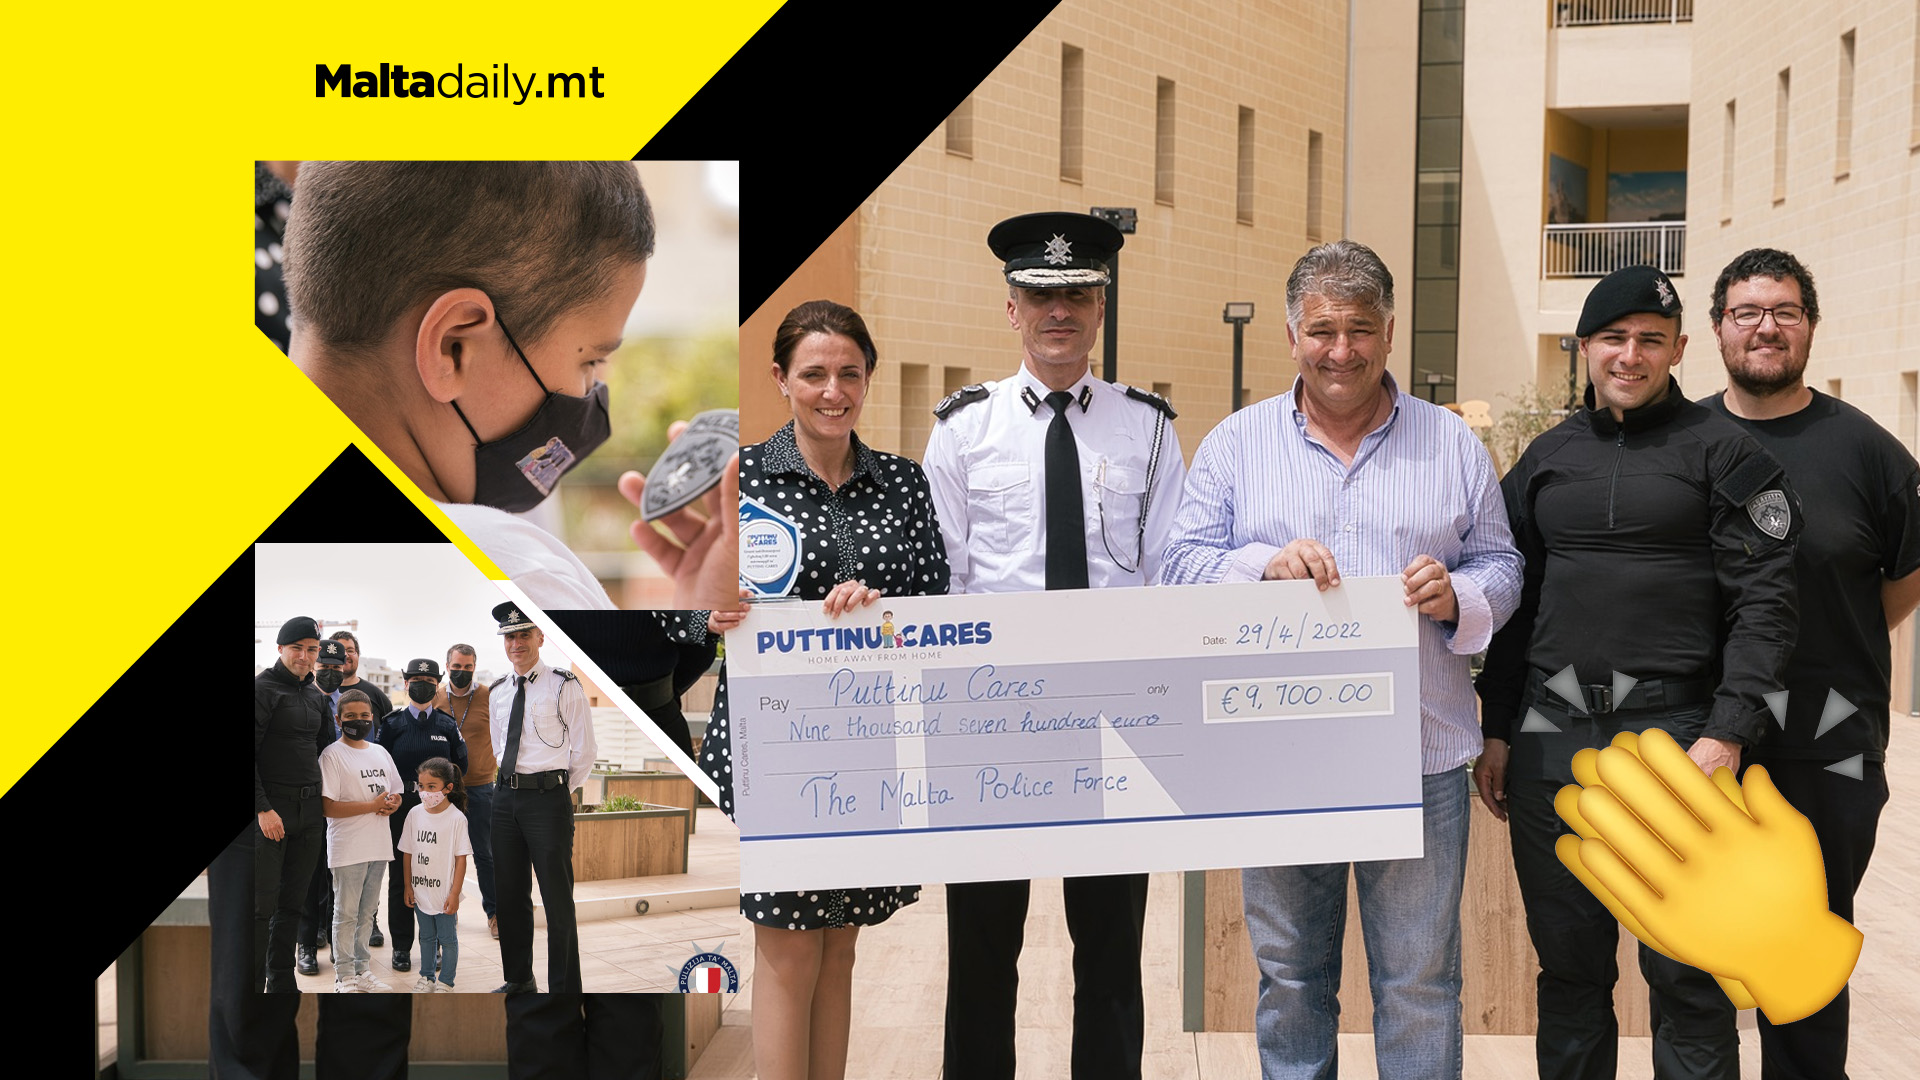 Malta Police Force donates €9,700 to Puttinu Cares